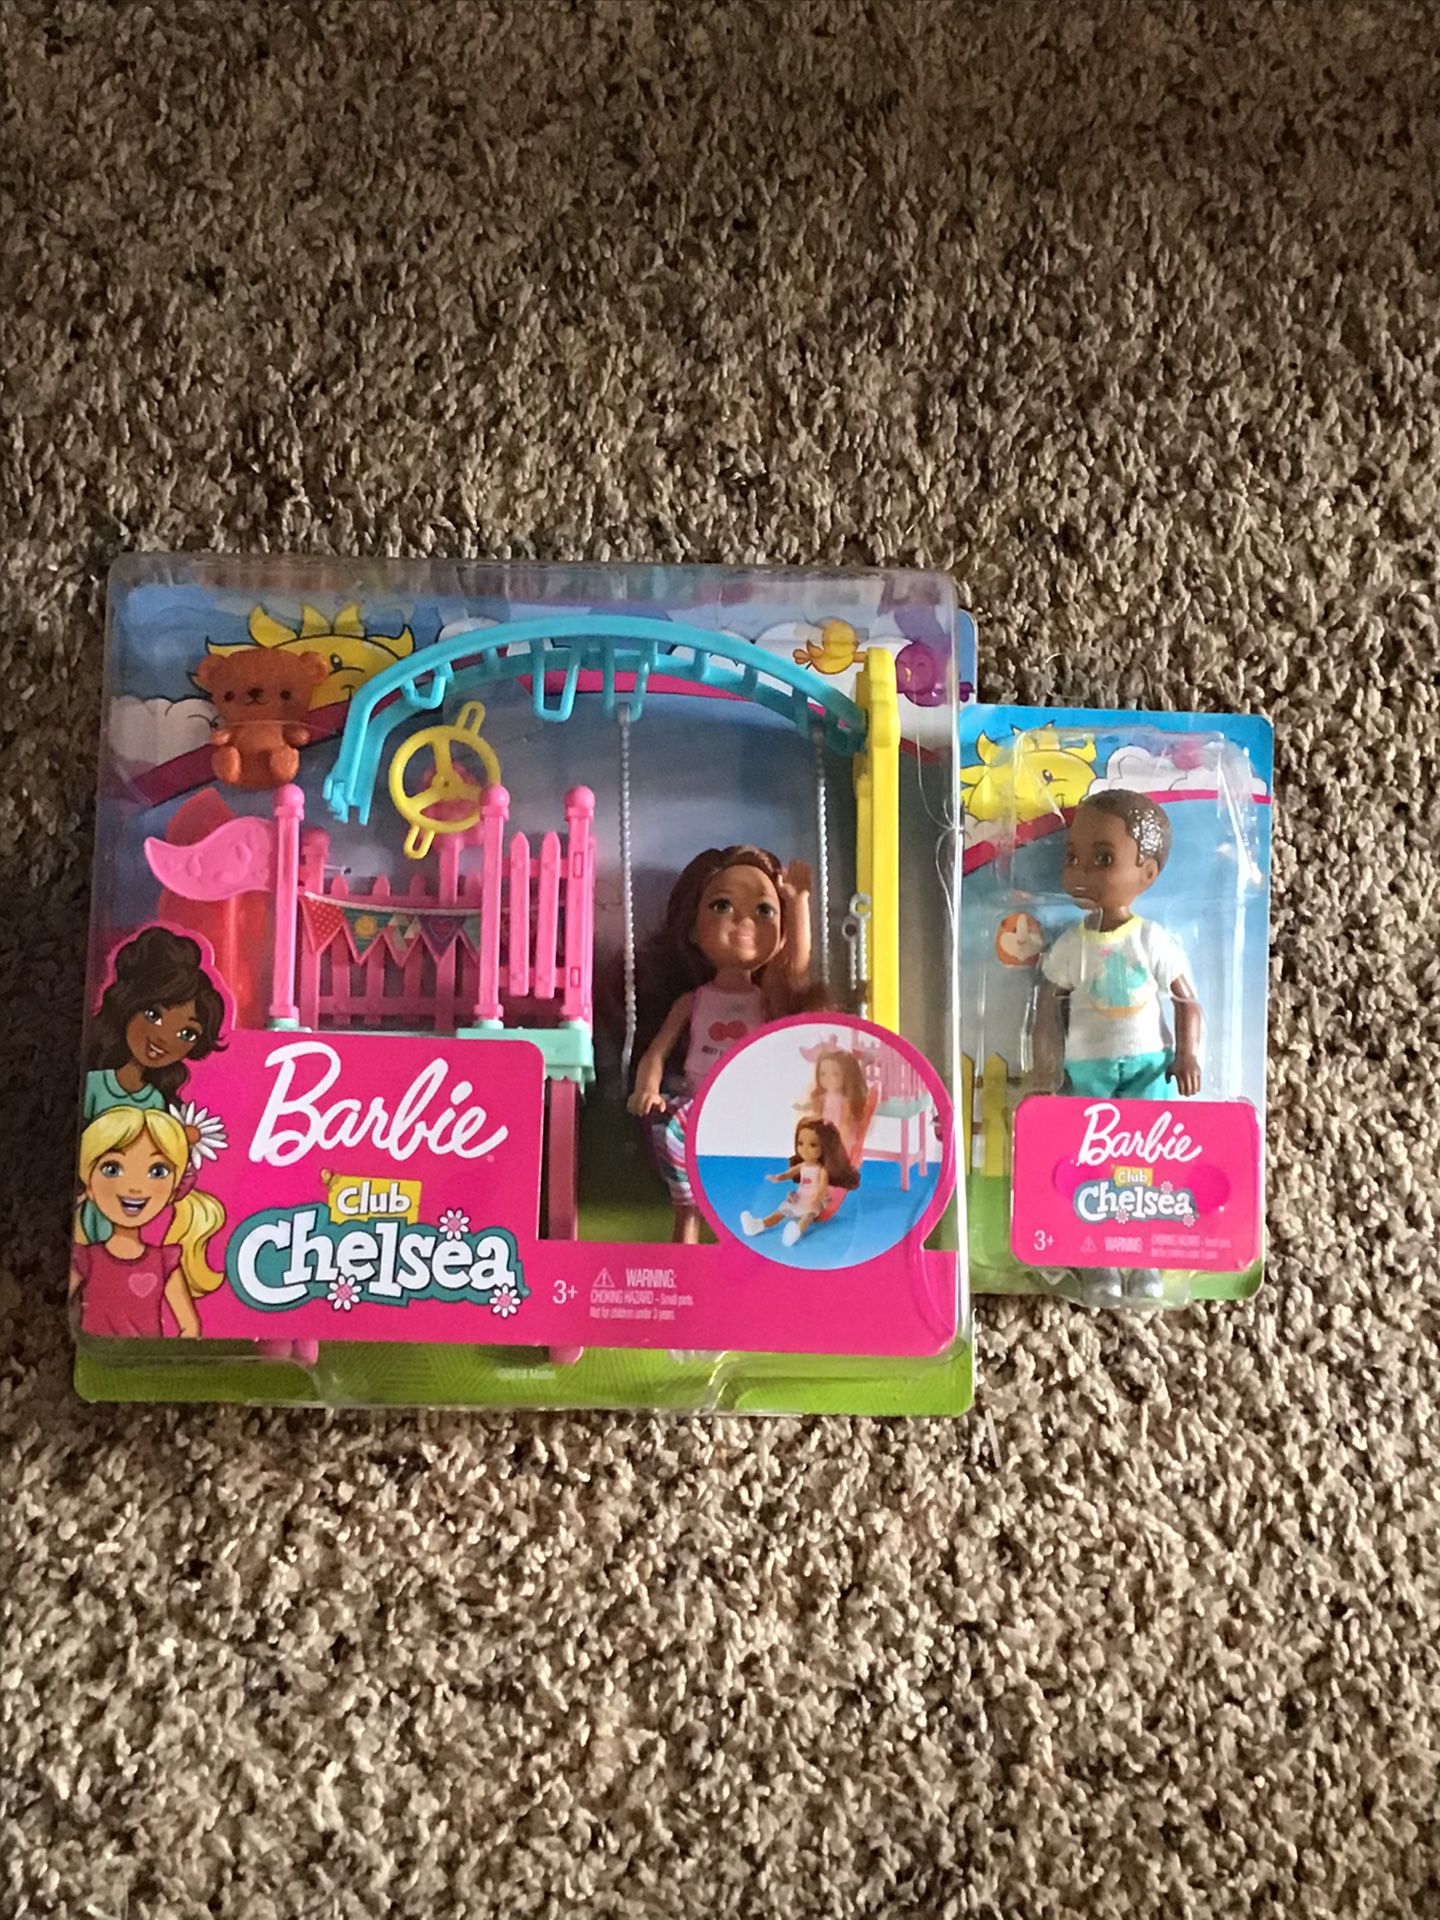 Barbie club Chelsea set.